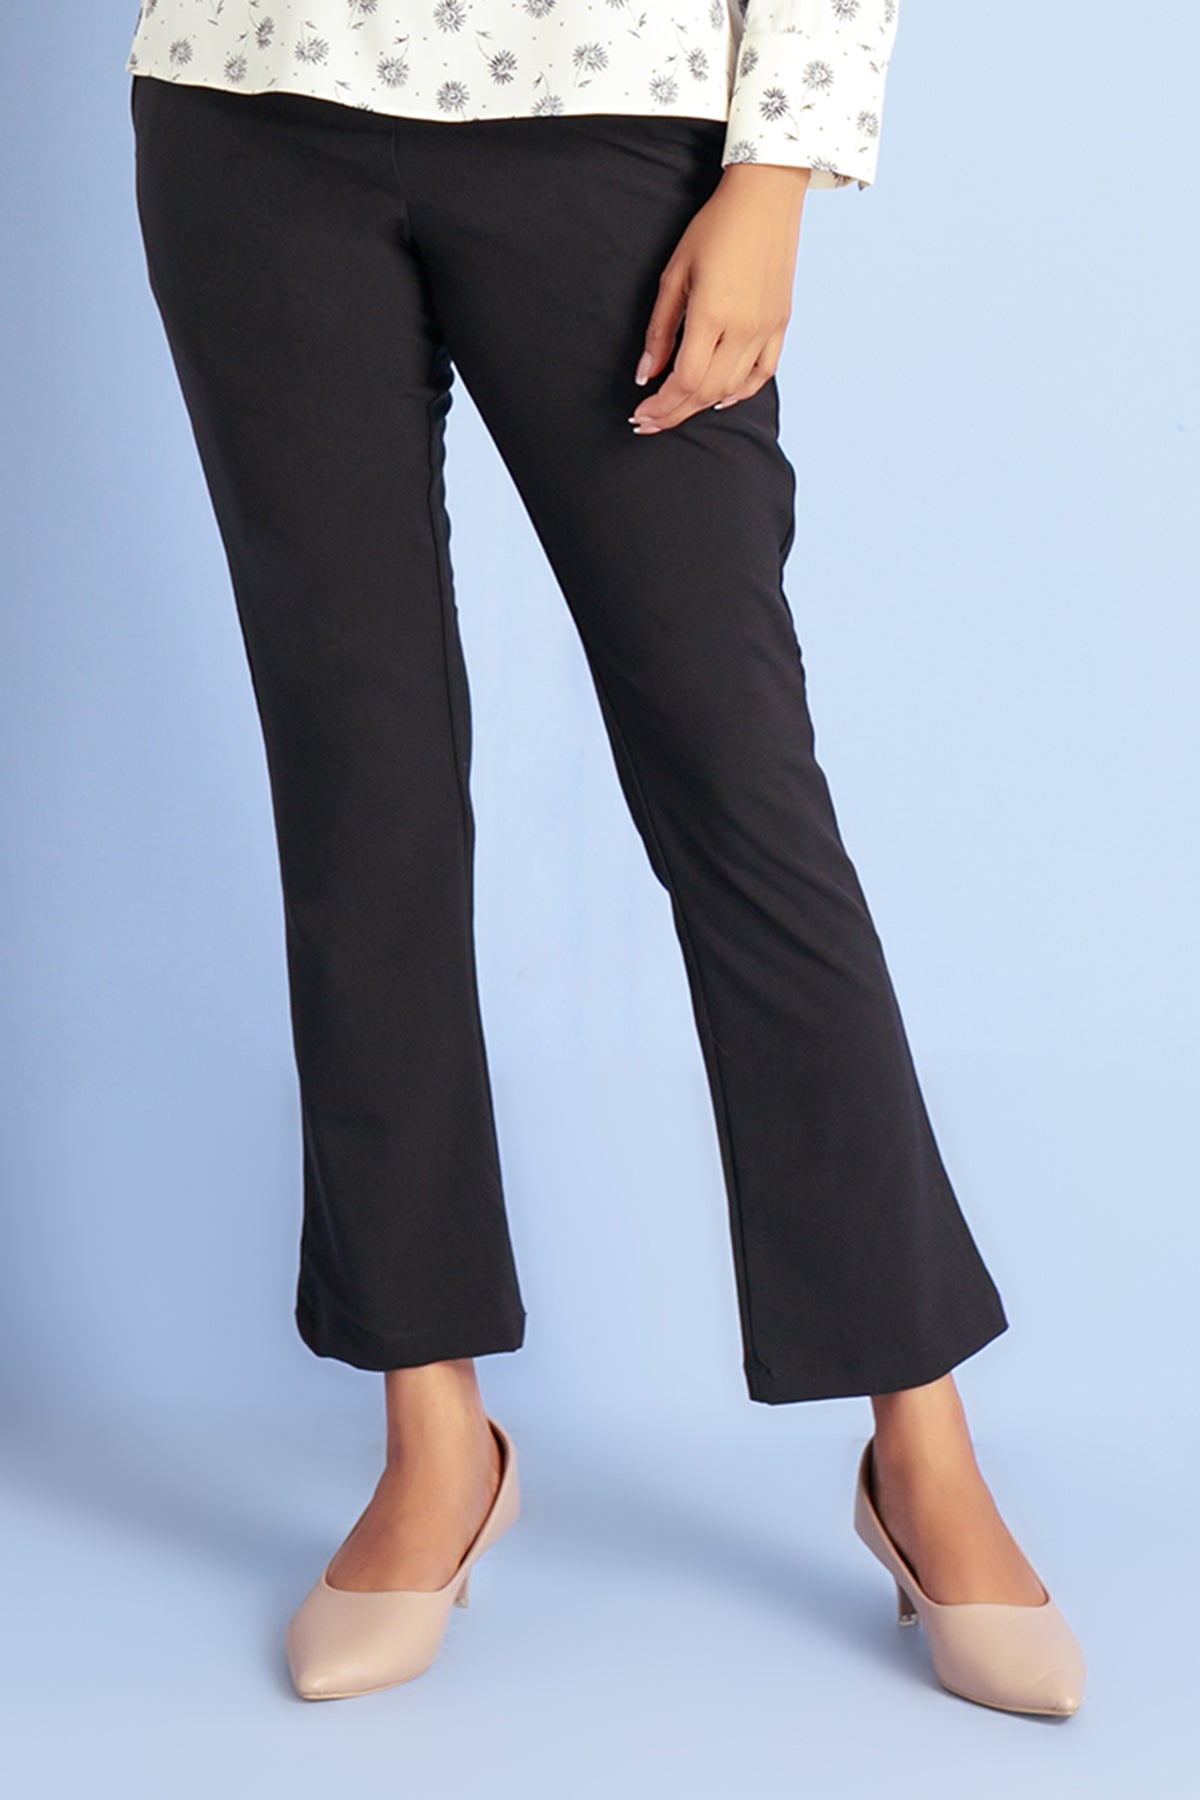 Trousers (Boot cut) for women, Buy online